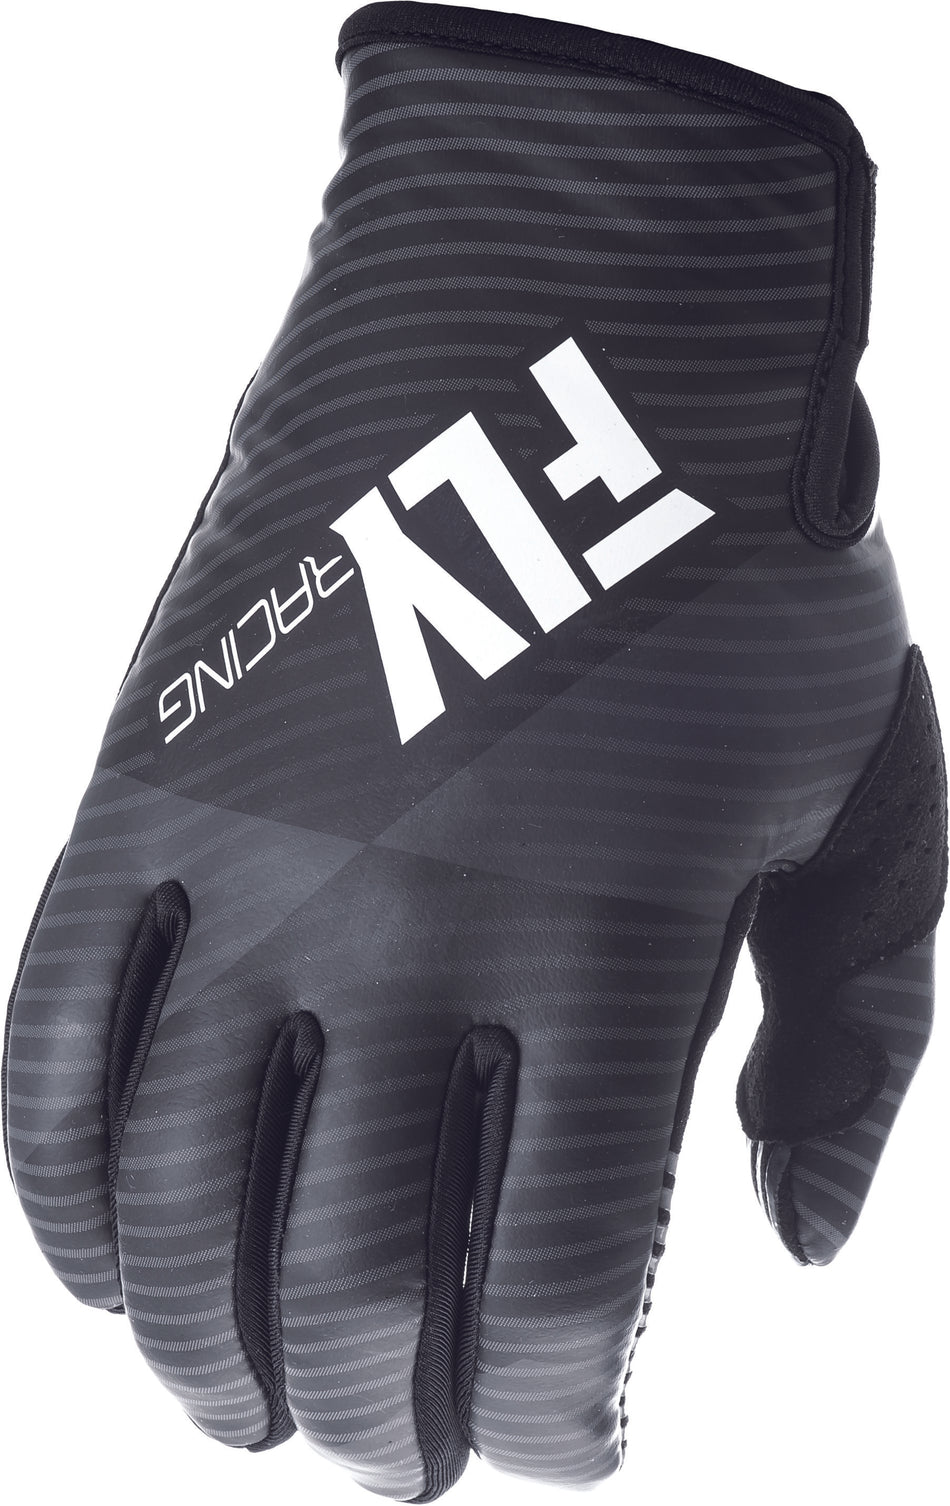 FLY RACING 907 Neoprene Gloves Black/Grey Sz 11 369-64011